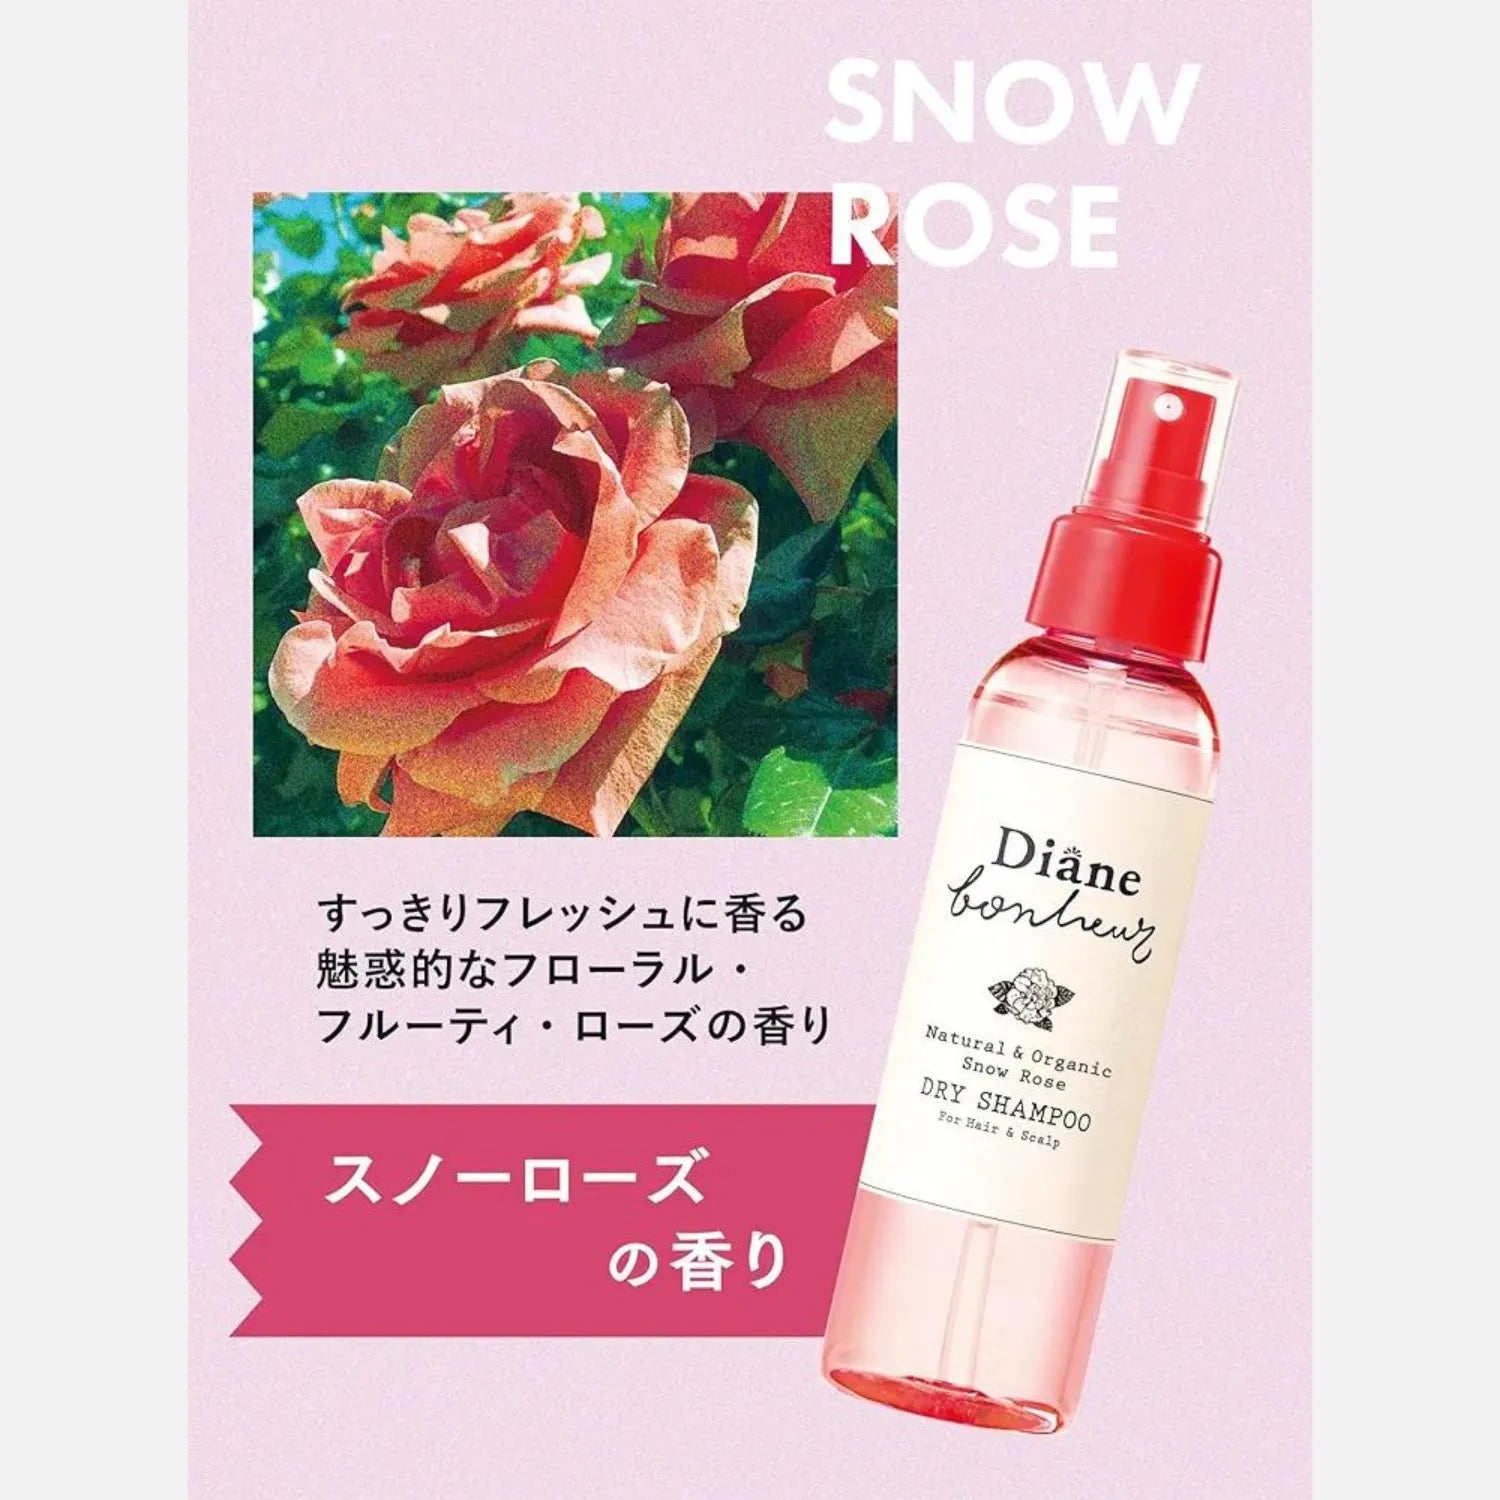 Diane Bonheur Organic Dry Shampoo Snow Rose 120ml